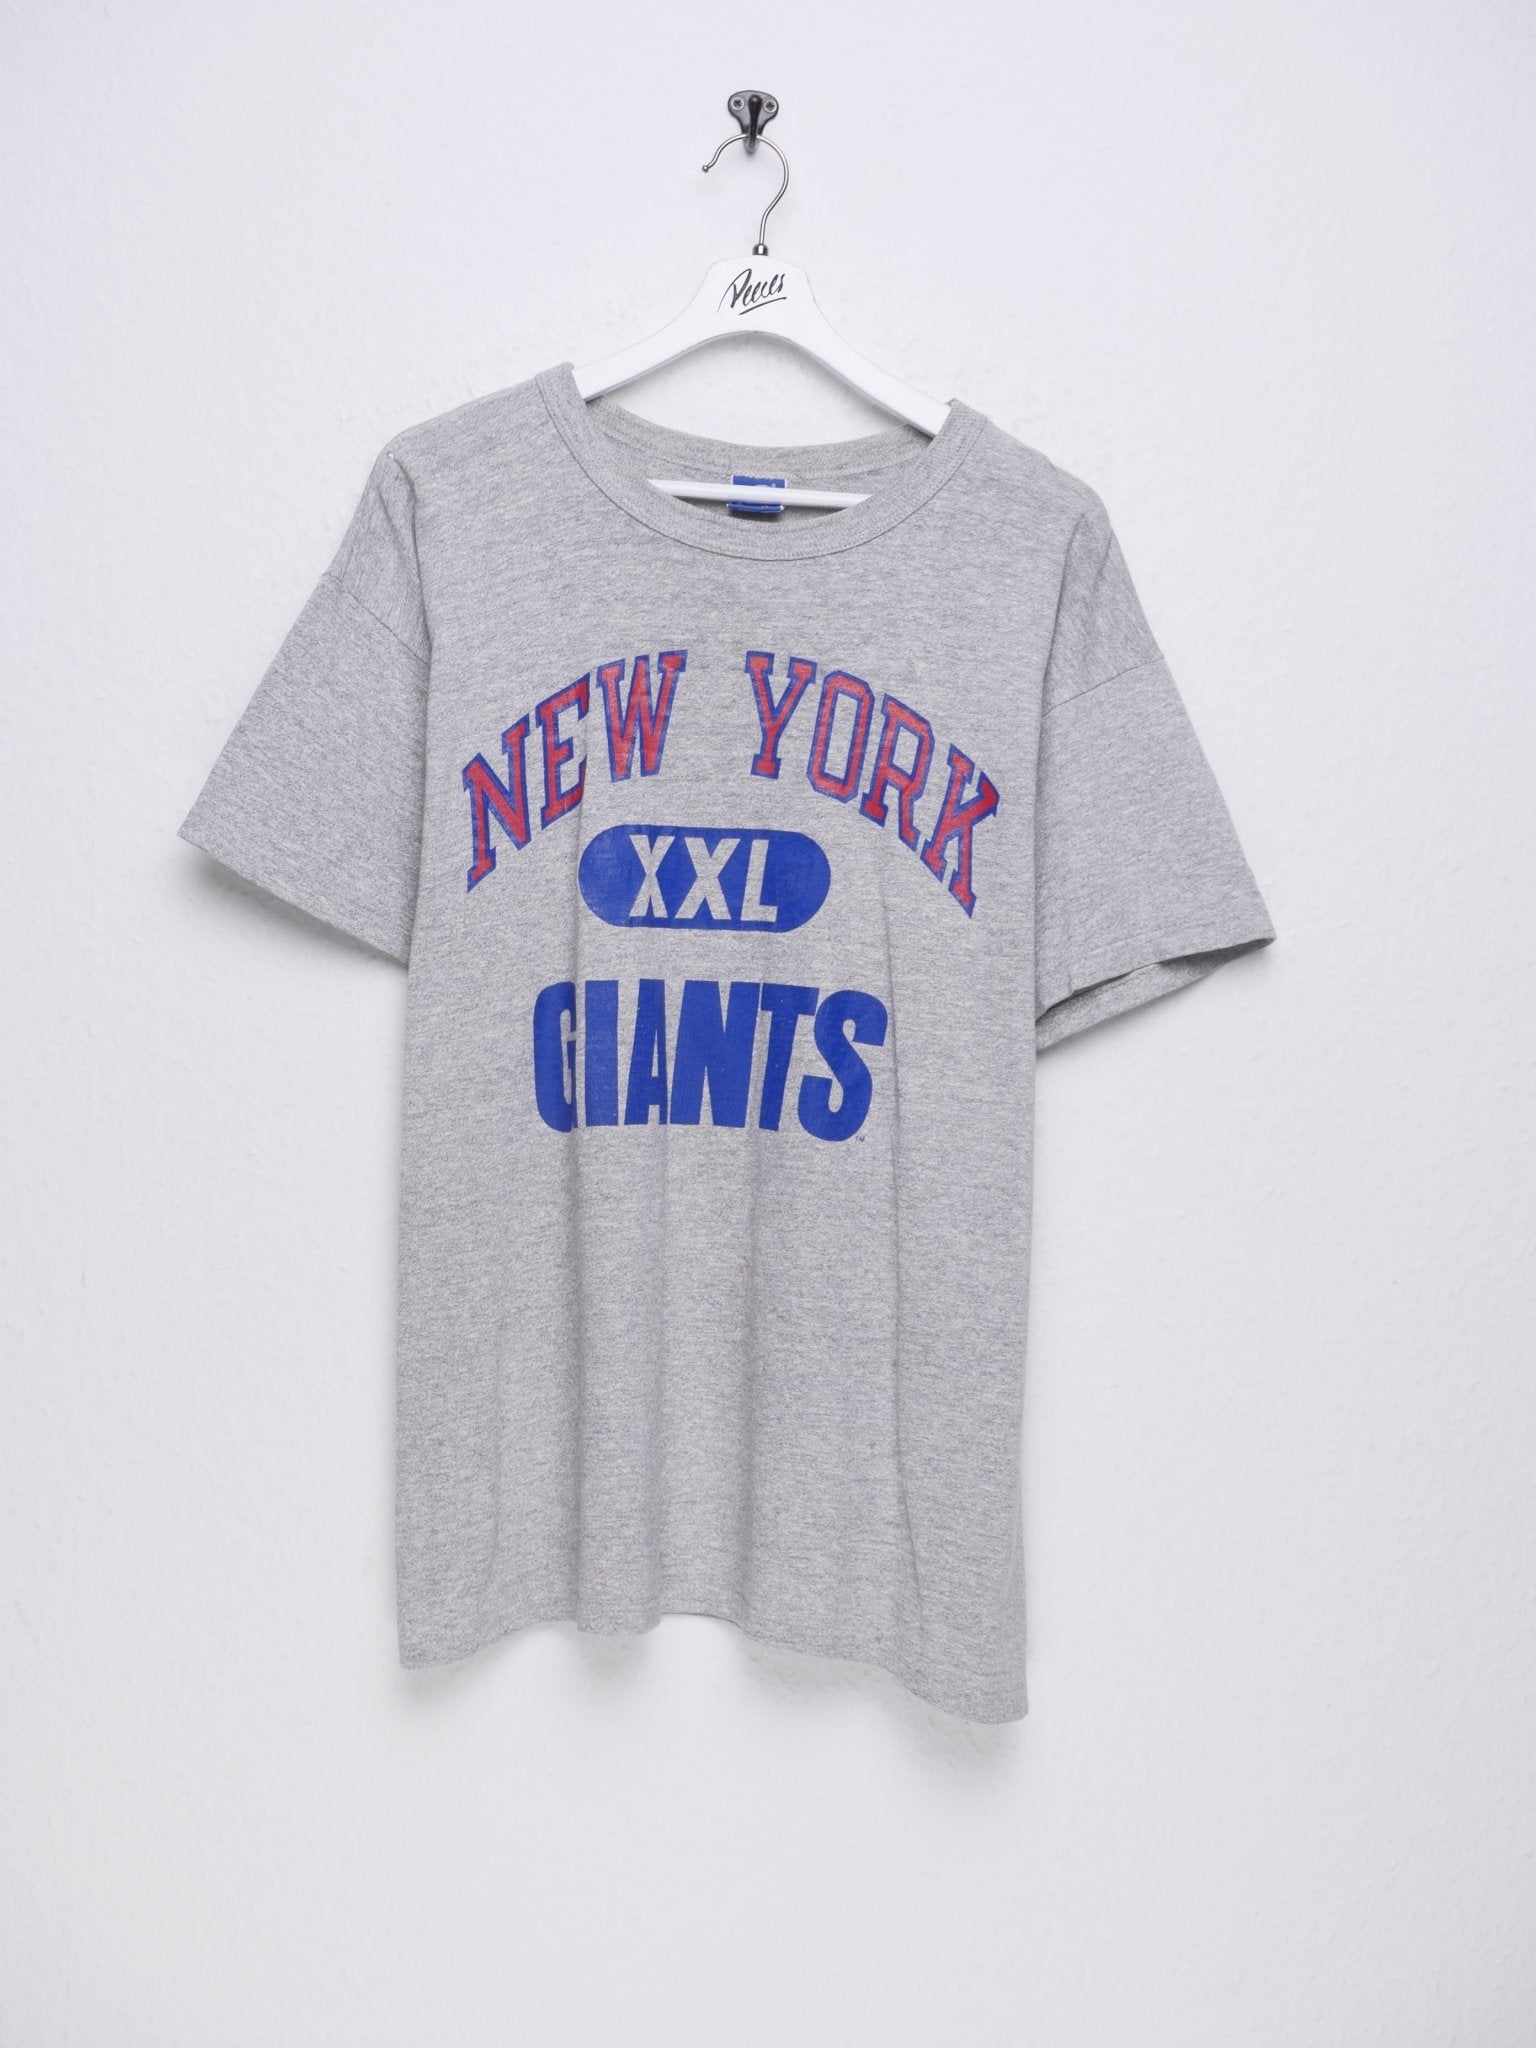 New York Giants vintage logo jersey